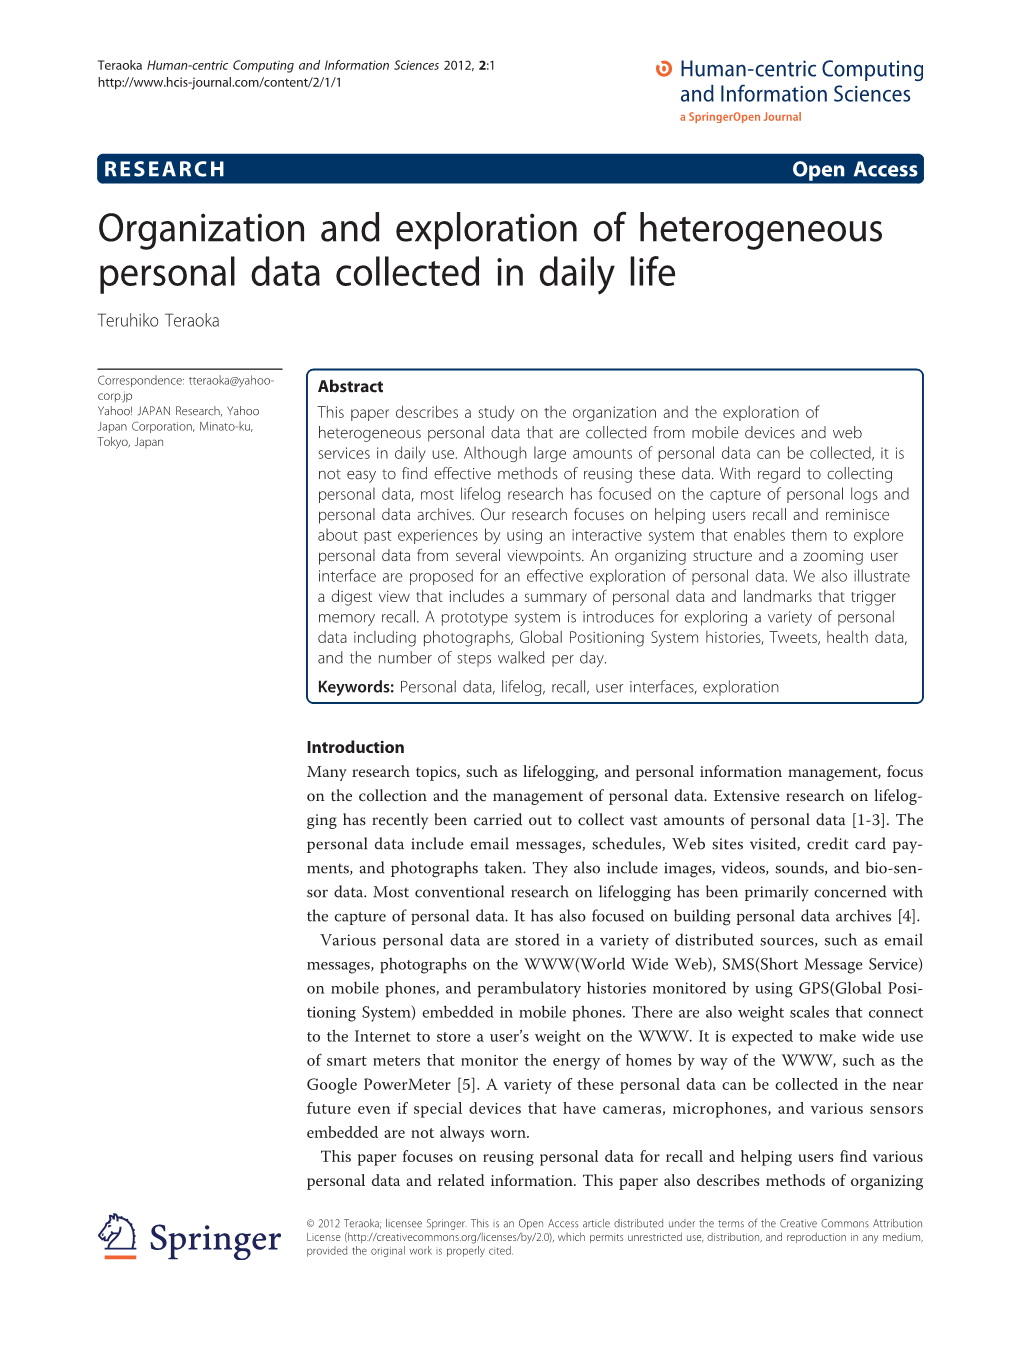 Organization and Exploration of Heterogeneous Personal Data Collected in Daily Life Teruhiko Teraoka